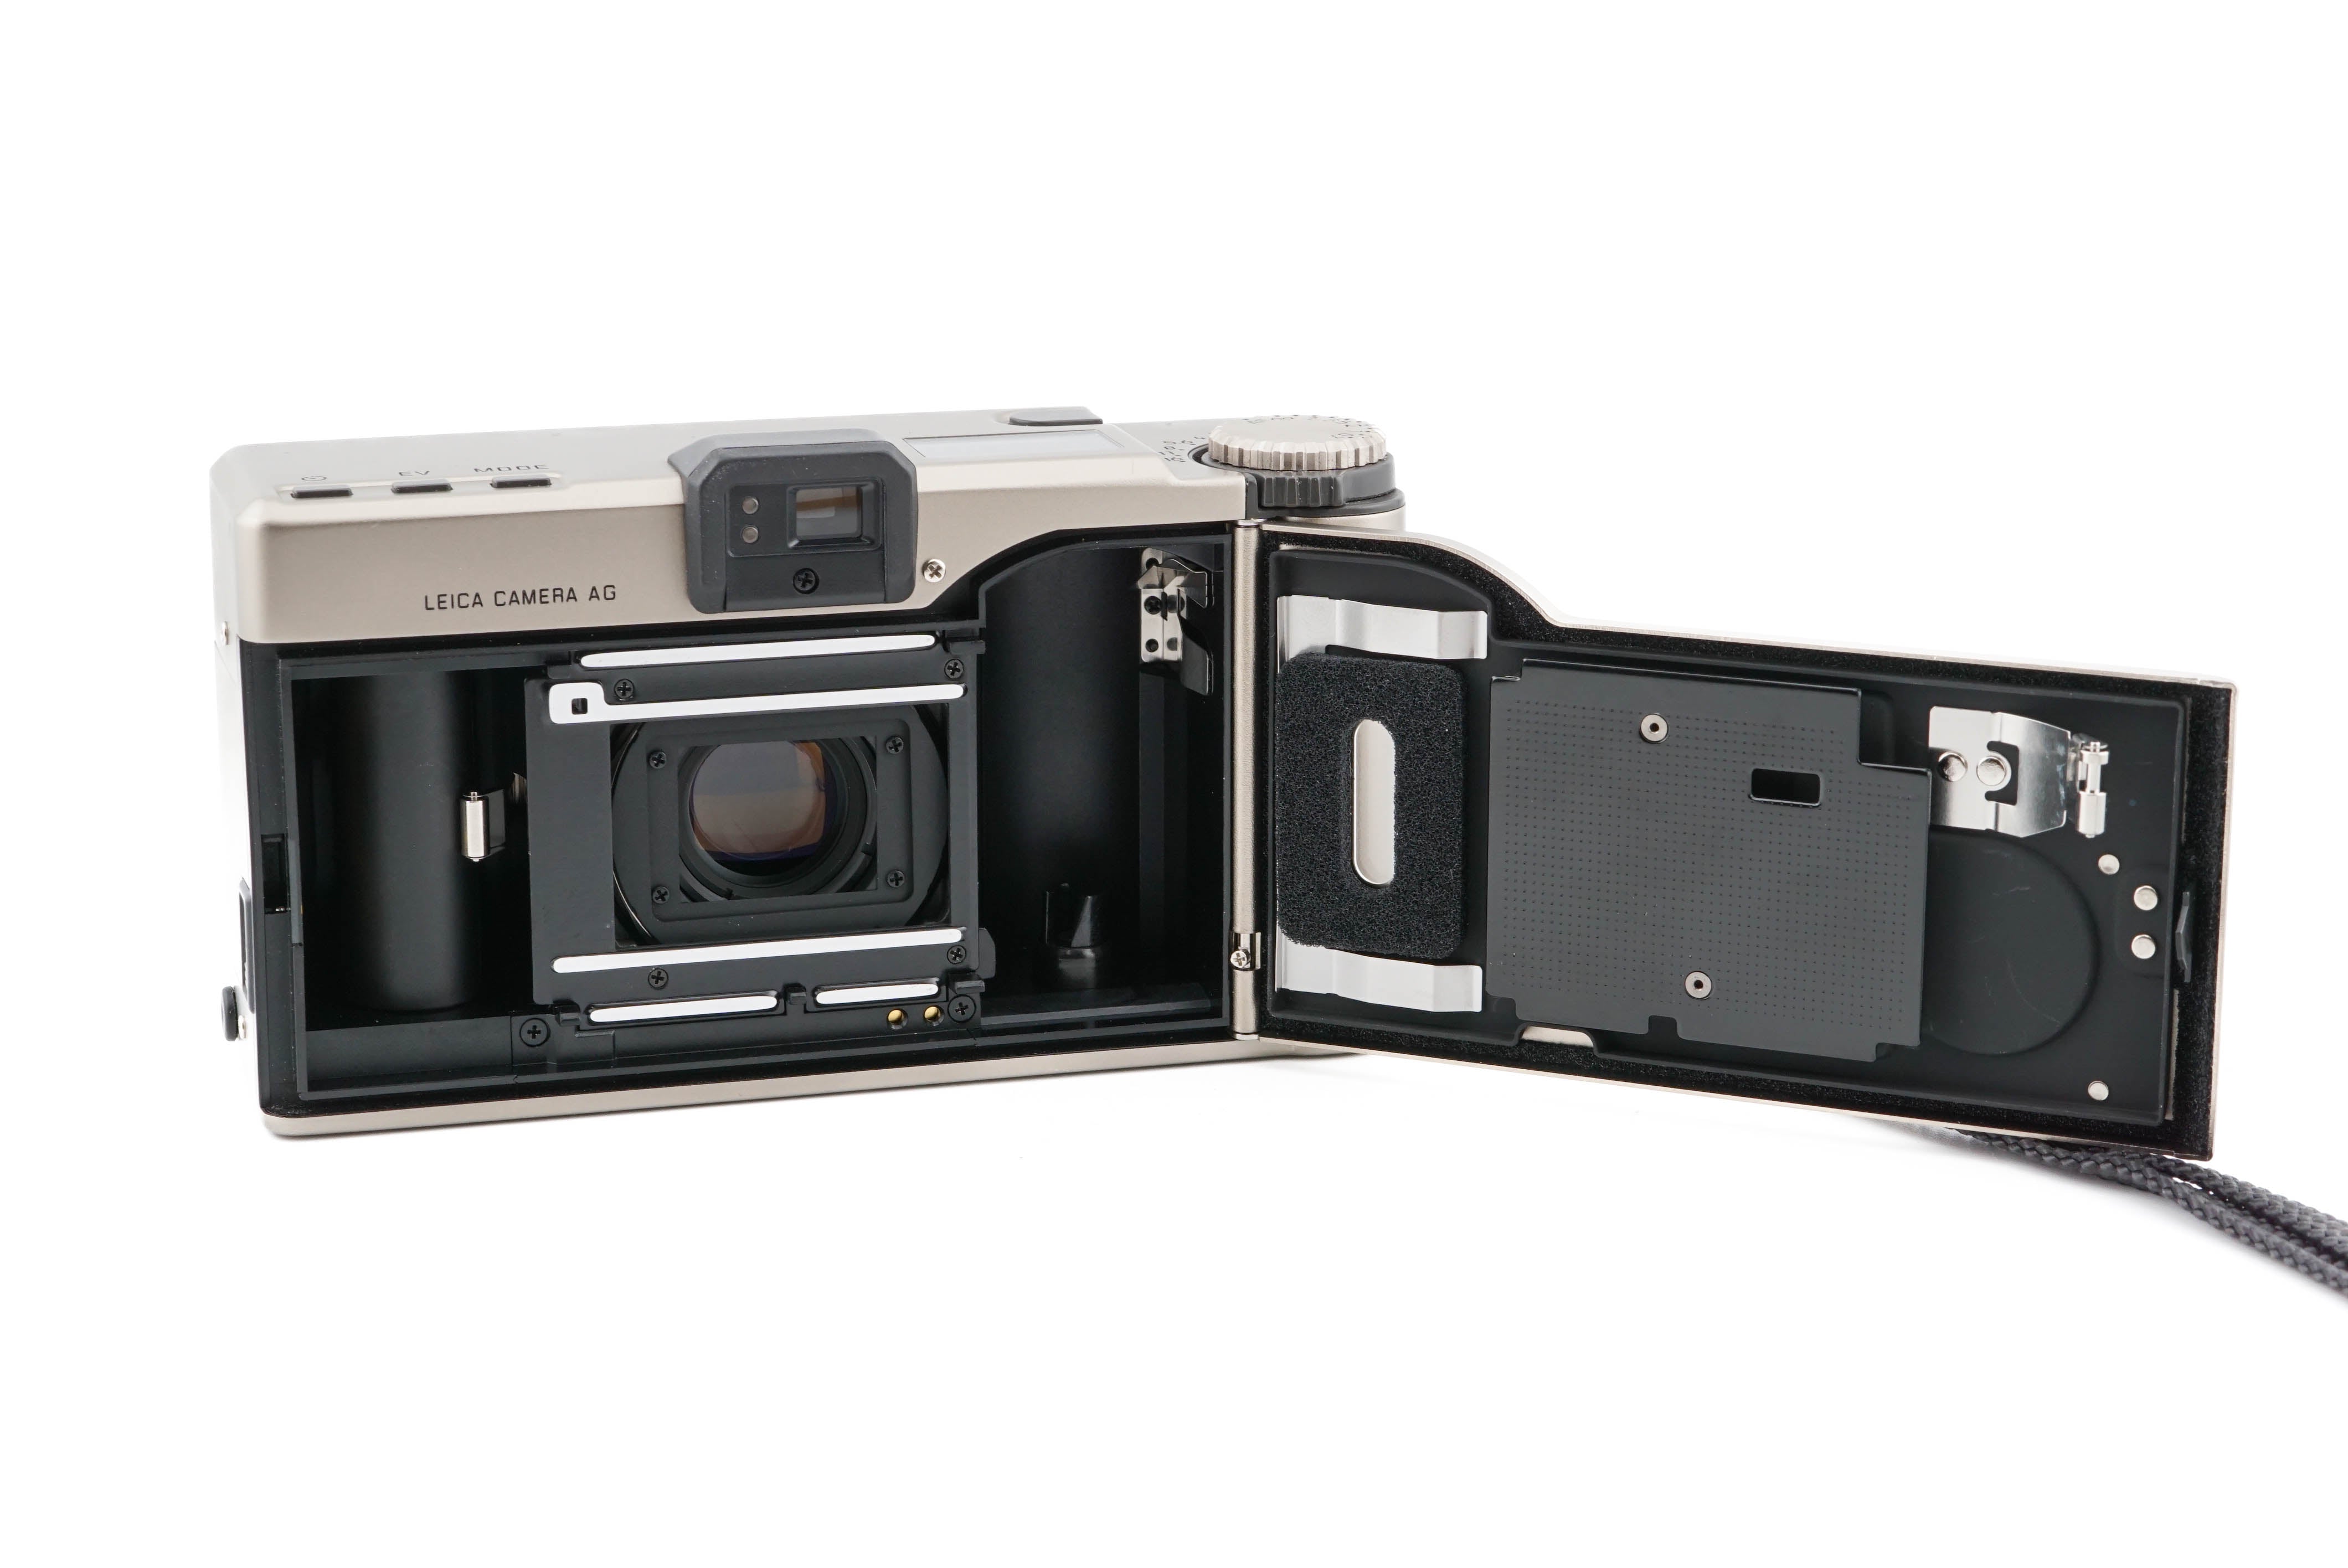 Leica Minilux (18006) – Kamerastore